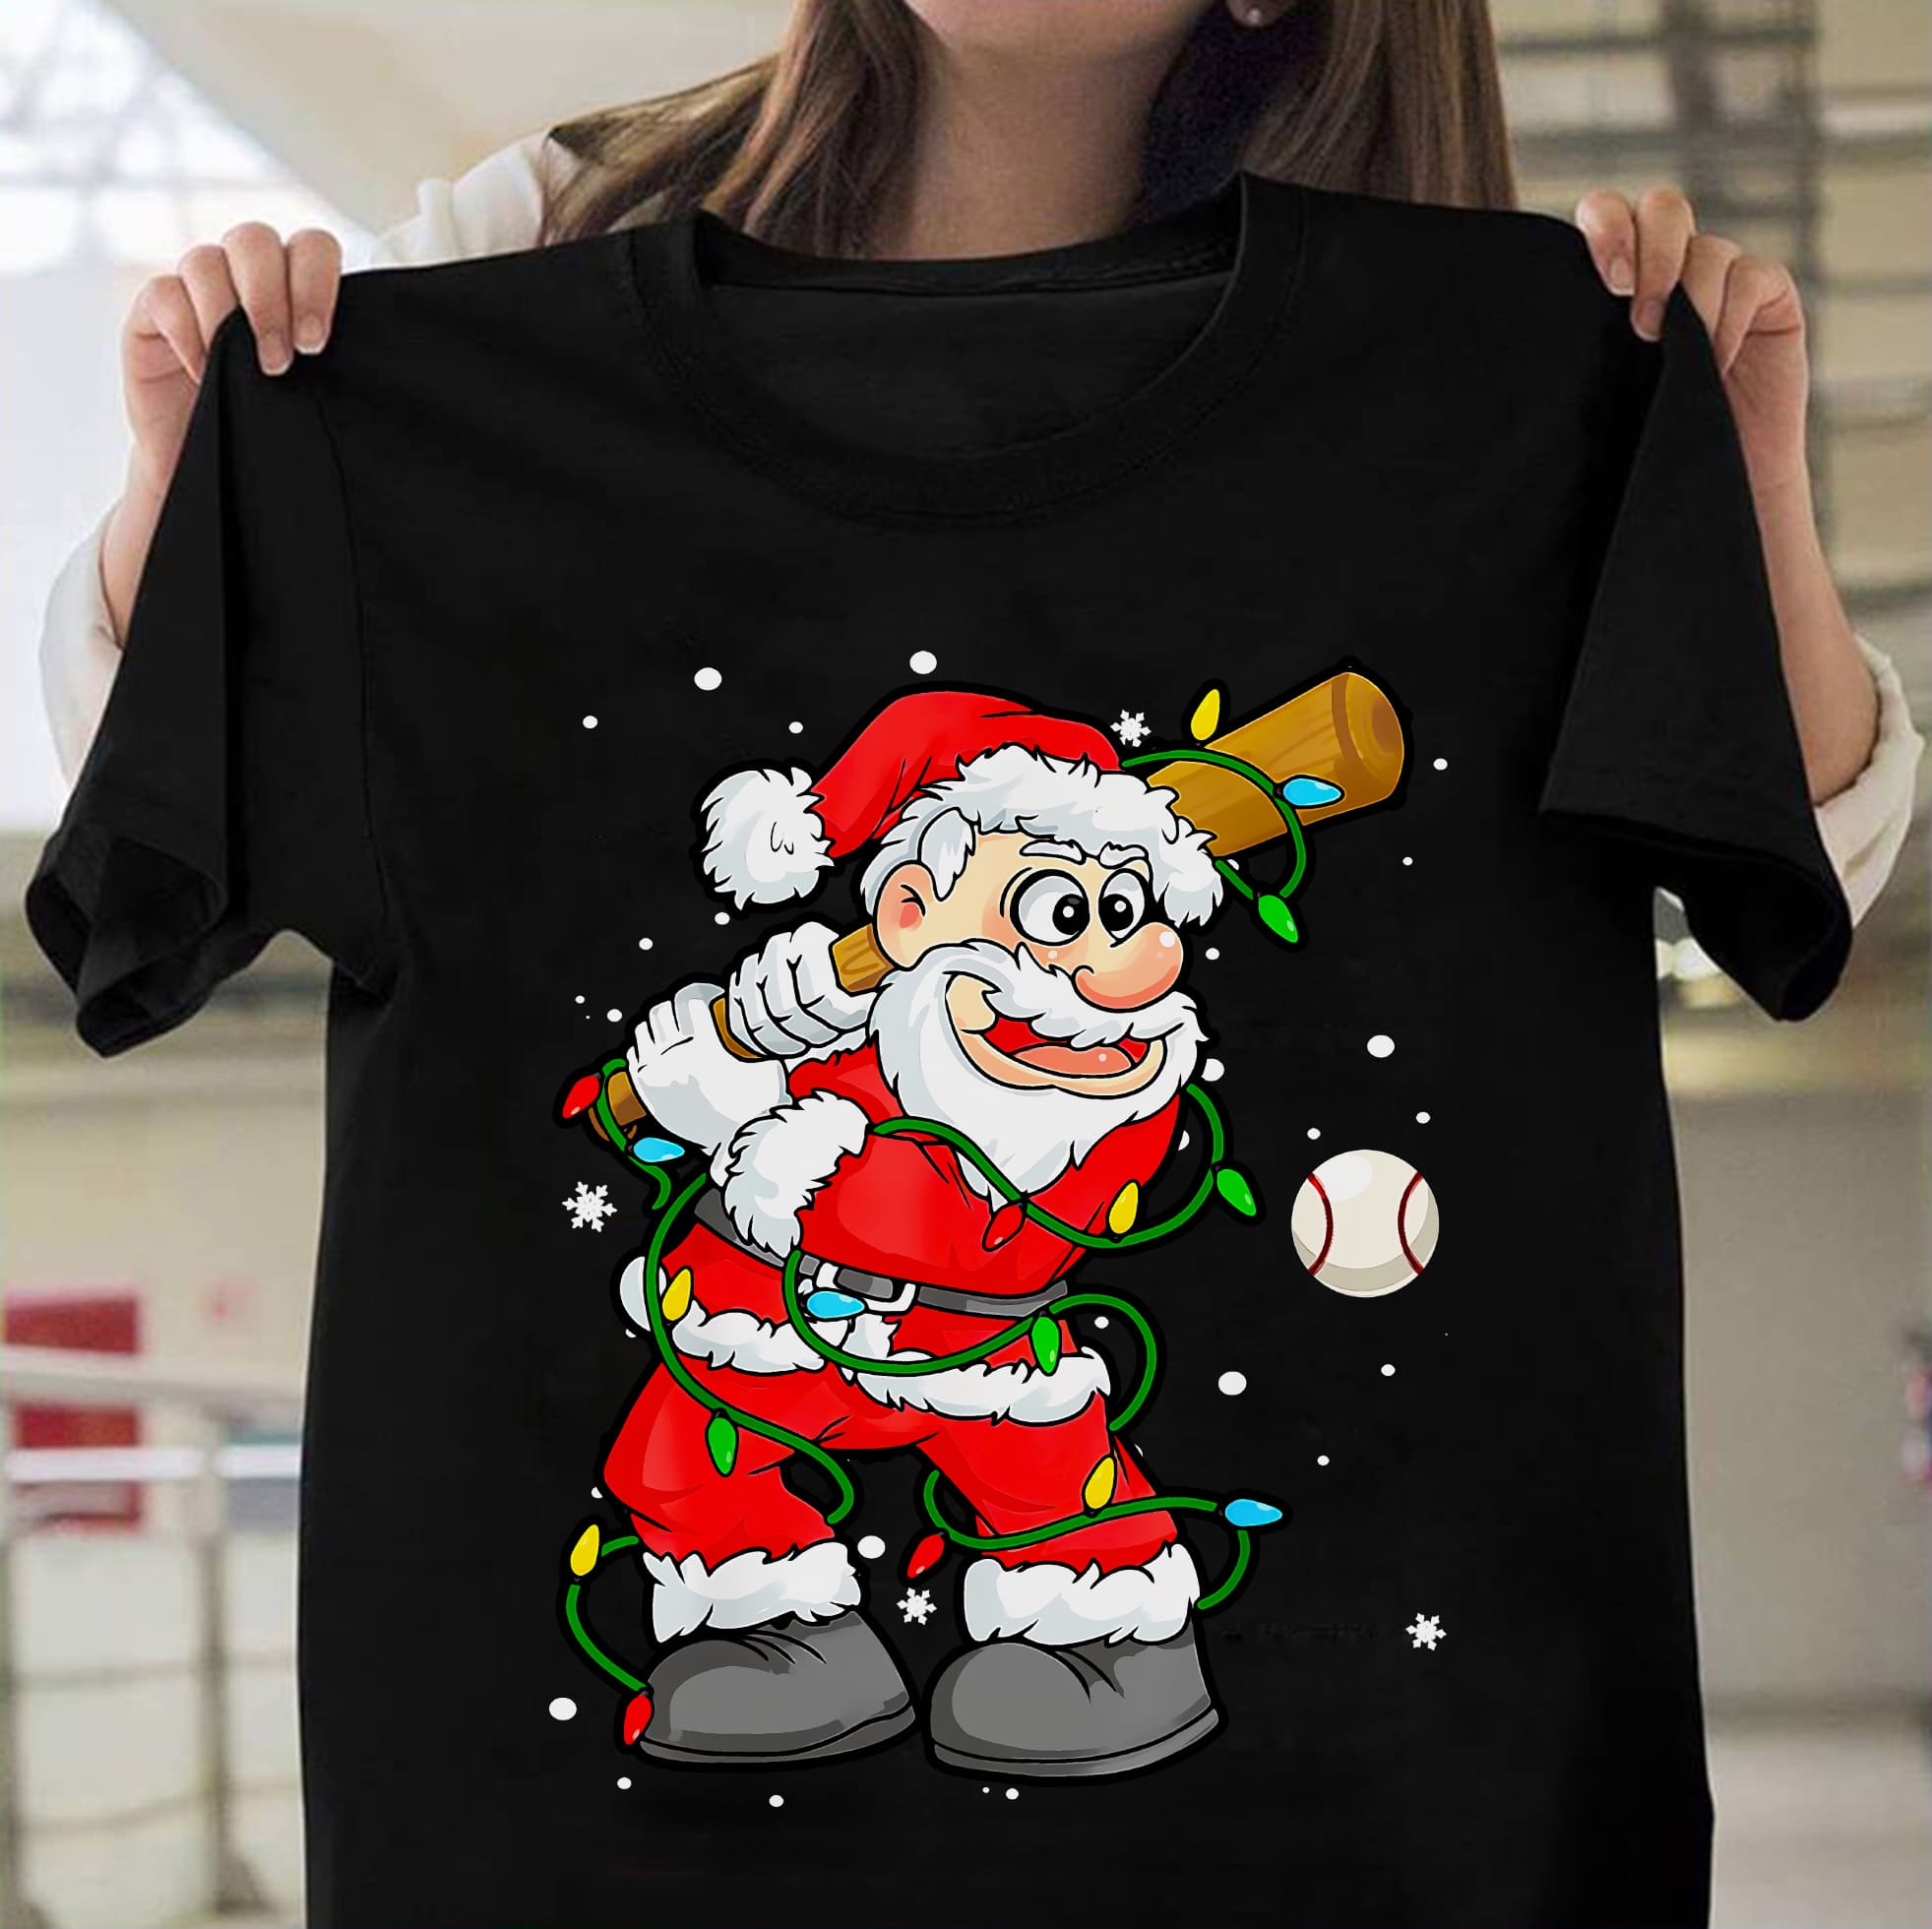 Santa Claus playing baseball - Christmas gift for baseballer, Baseball player T-shirt